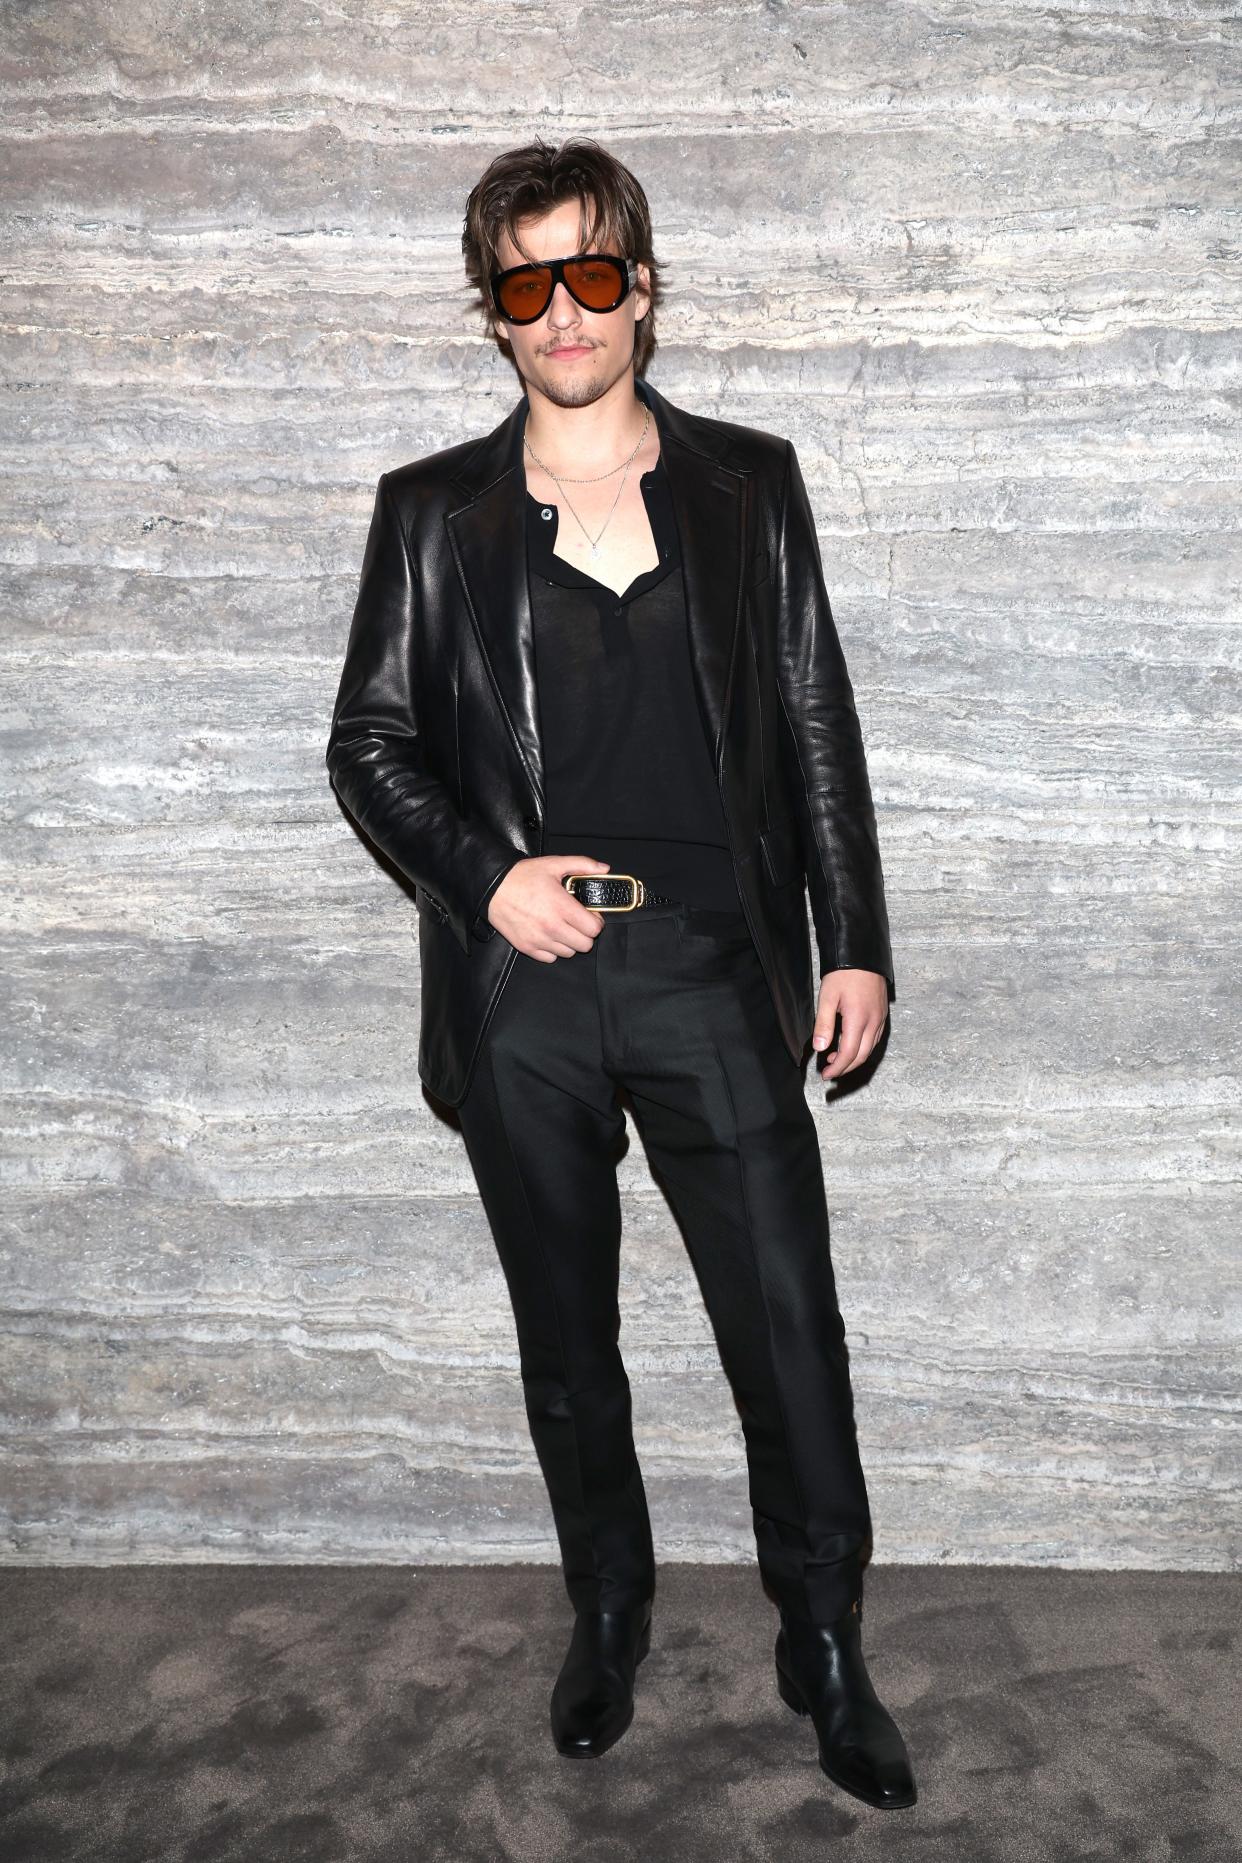 Jake Bongiovi attends the Tom Ford fashion show on Feb. 22 during Milan Fashion Week.